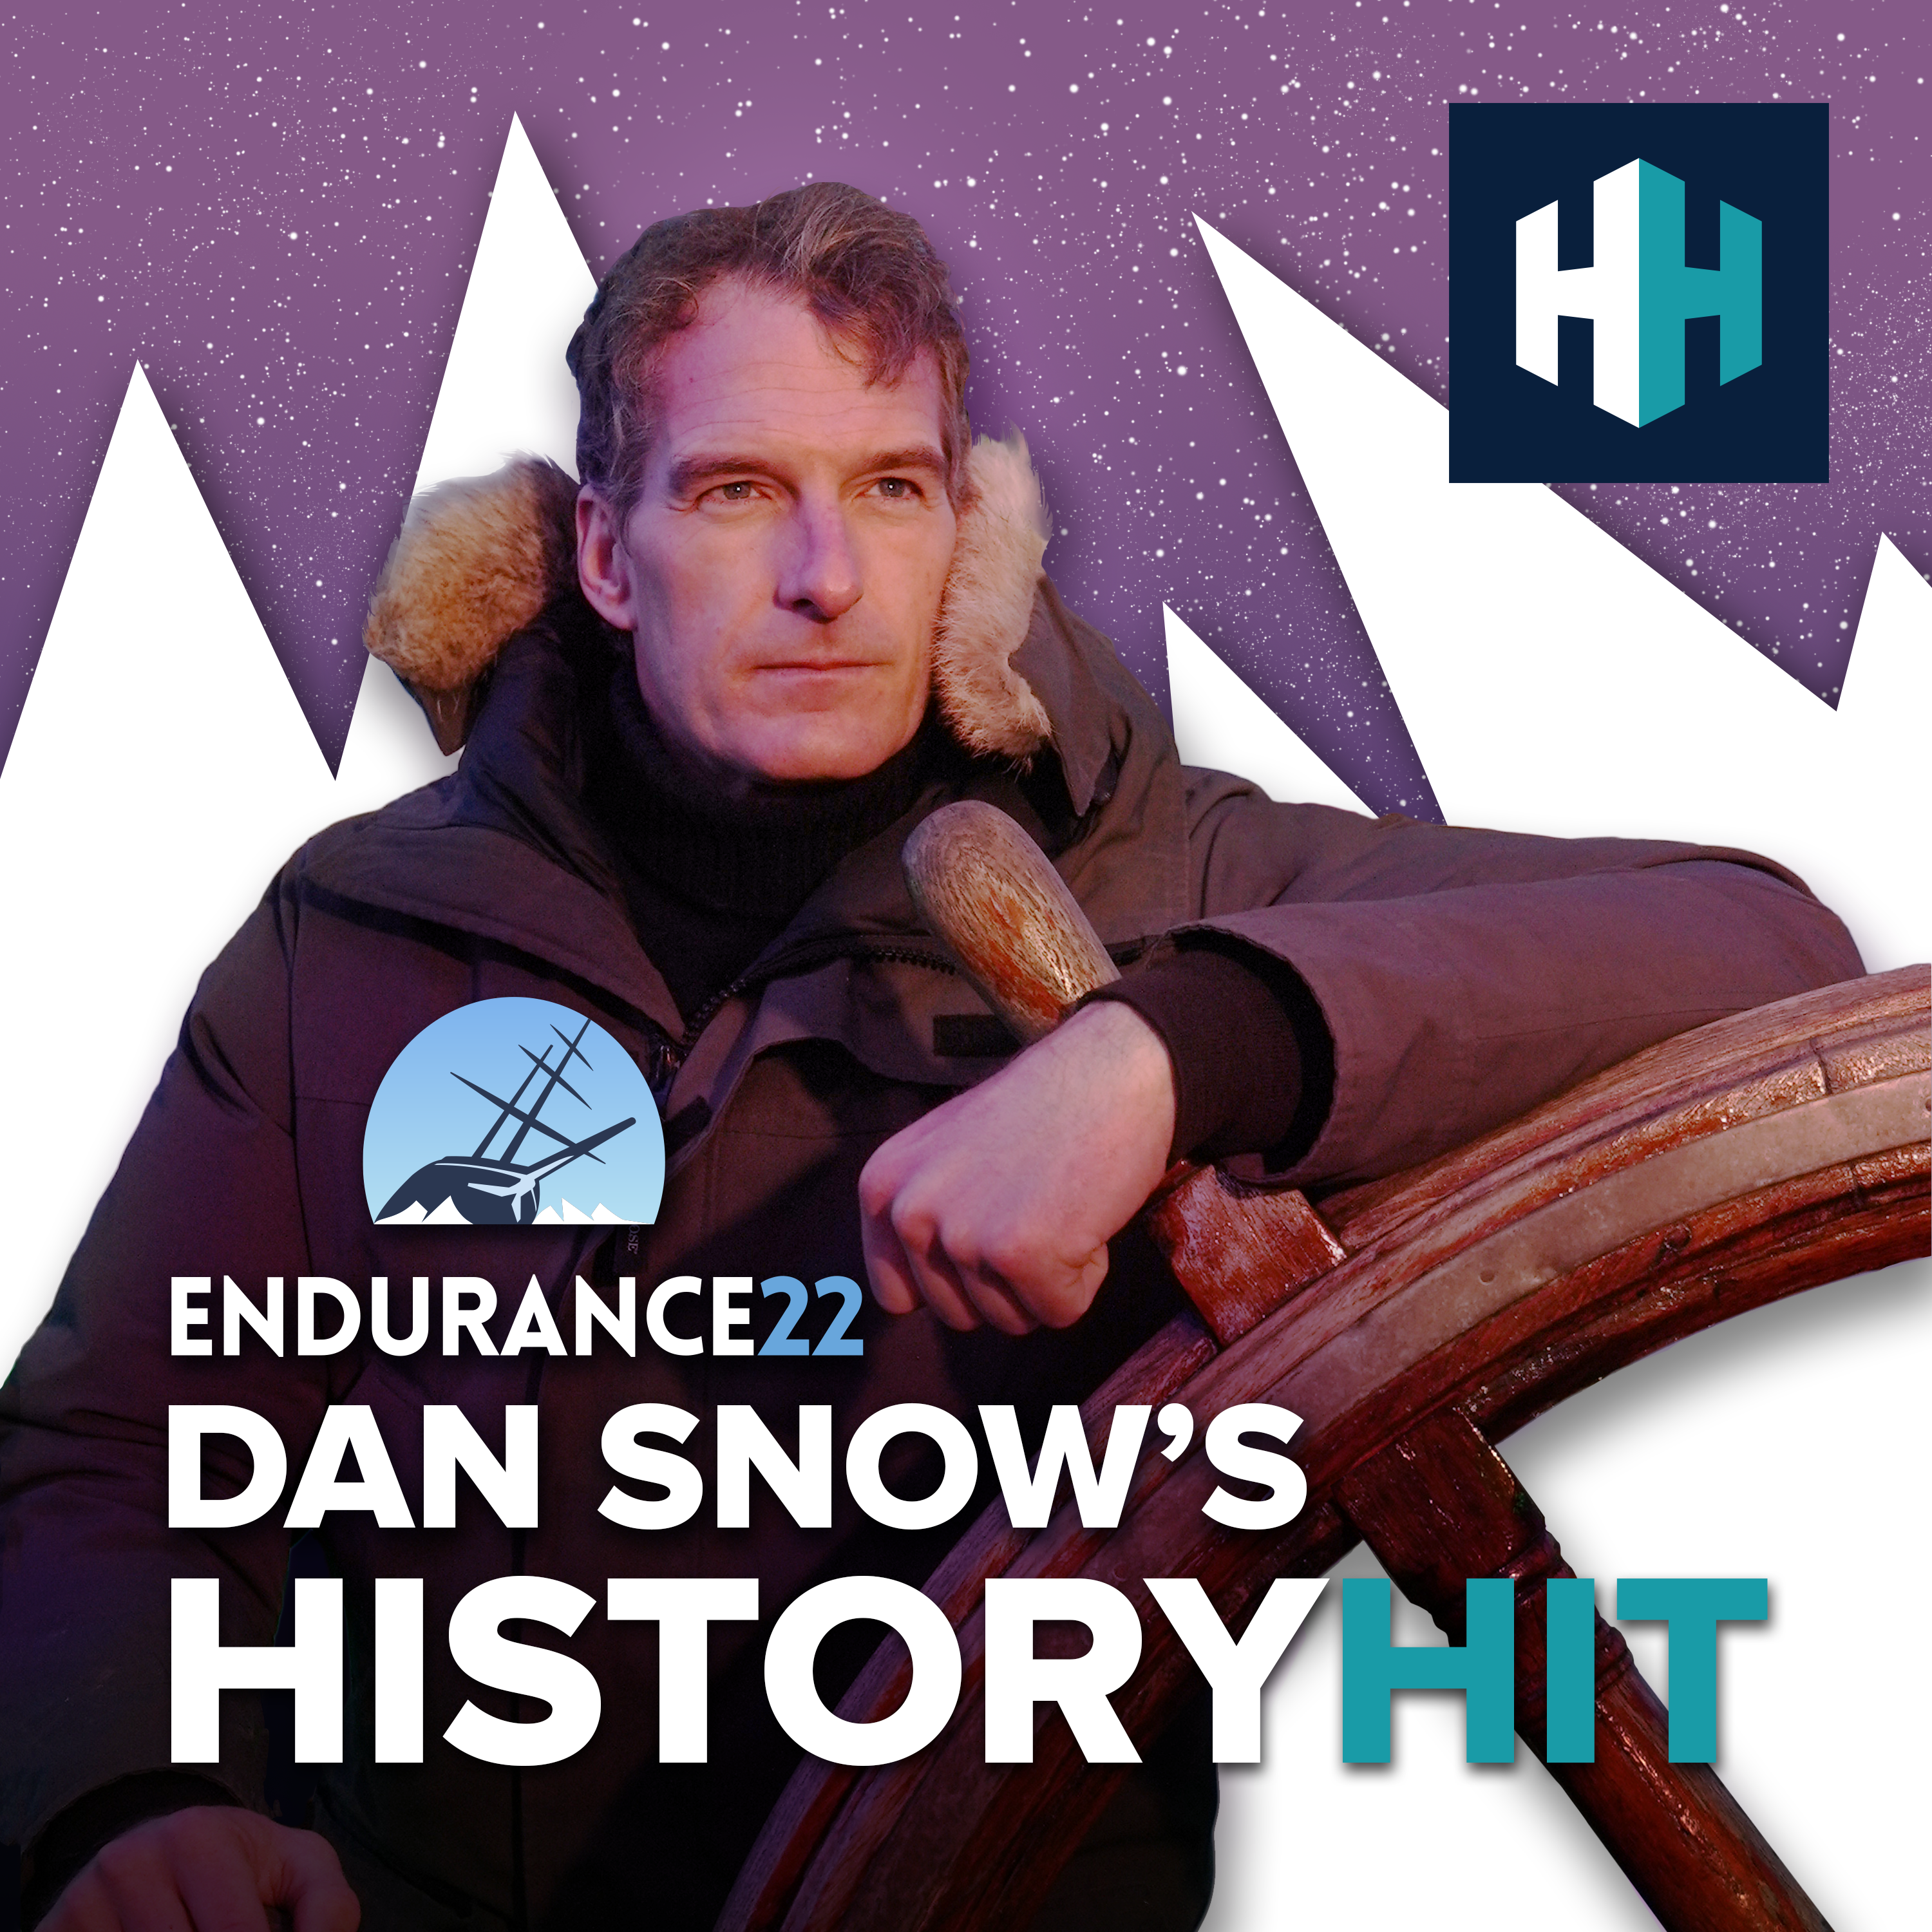 ENDURANCE22: Dan Sets Sail for Antarctica!